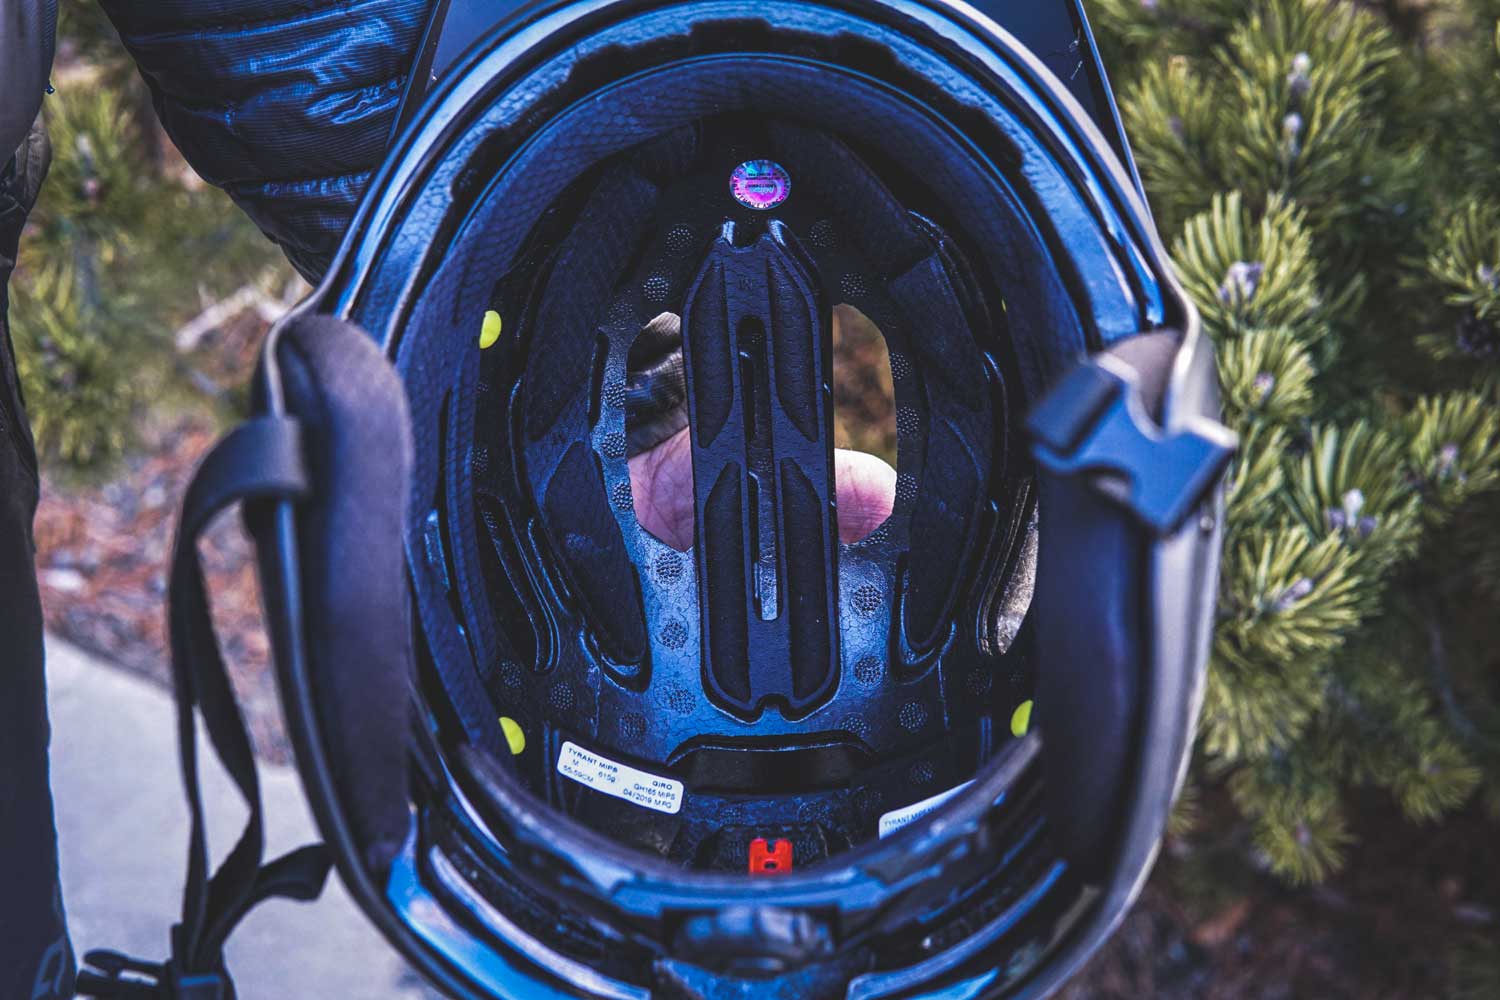 Giro Tyrant MIPS Helmet